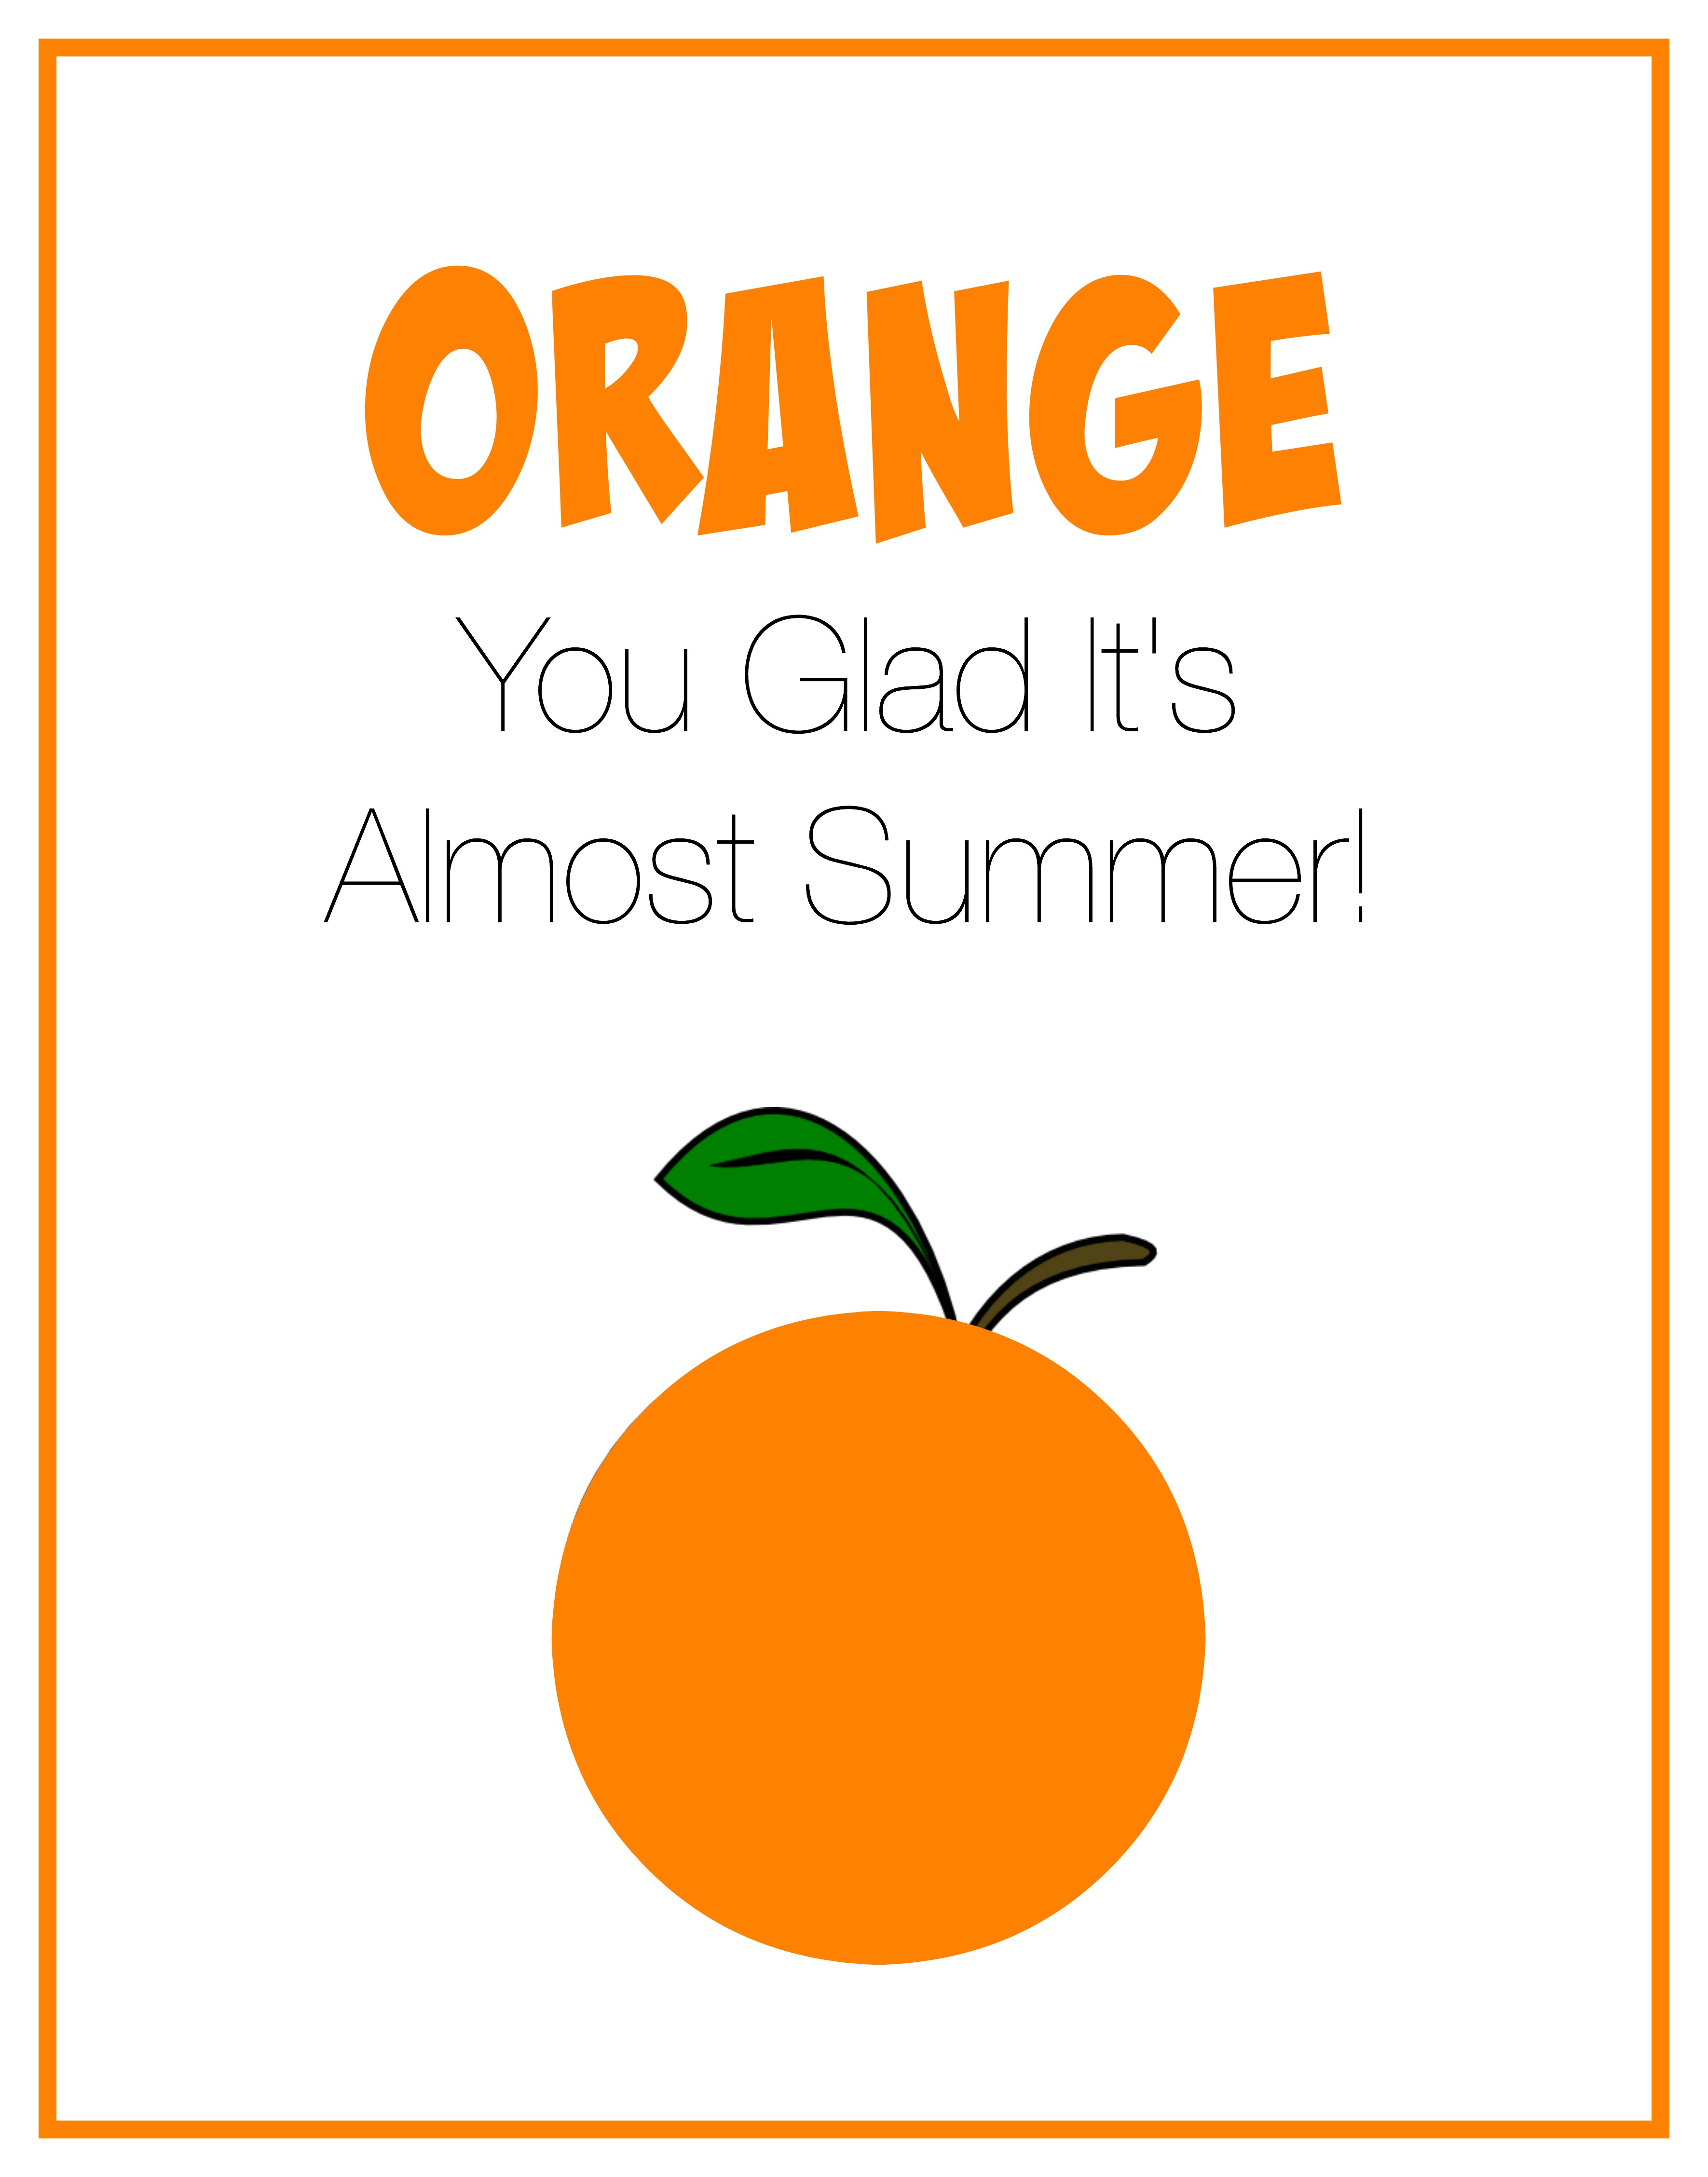 They like oranges. Orange you glad. Orange you glad перевод. At25128 чтение Orange. Almost Summer.